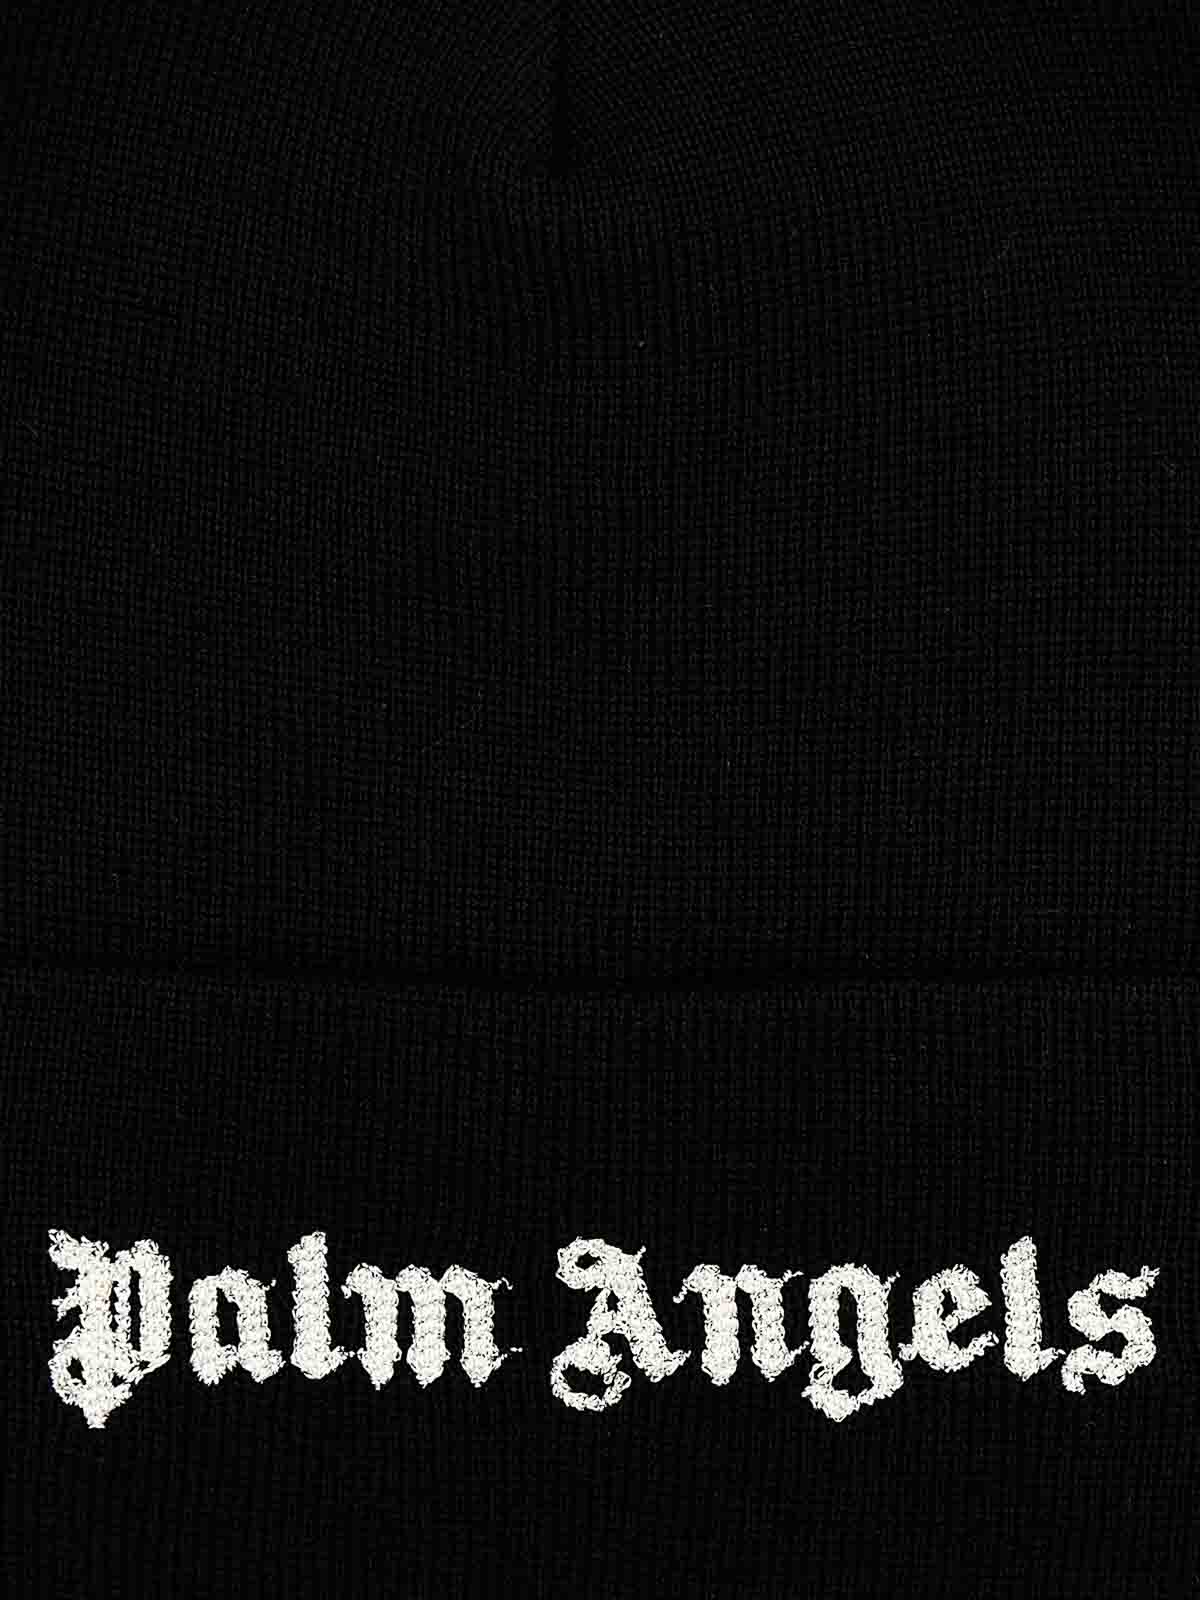 Shop Palm Angels Gorro - Negro In Black